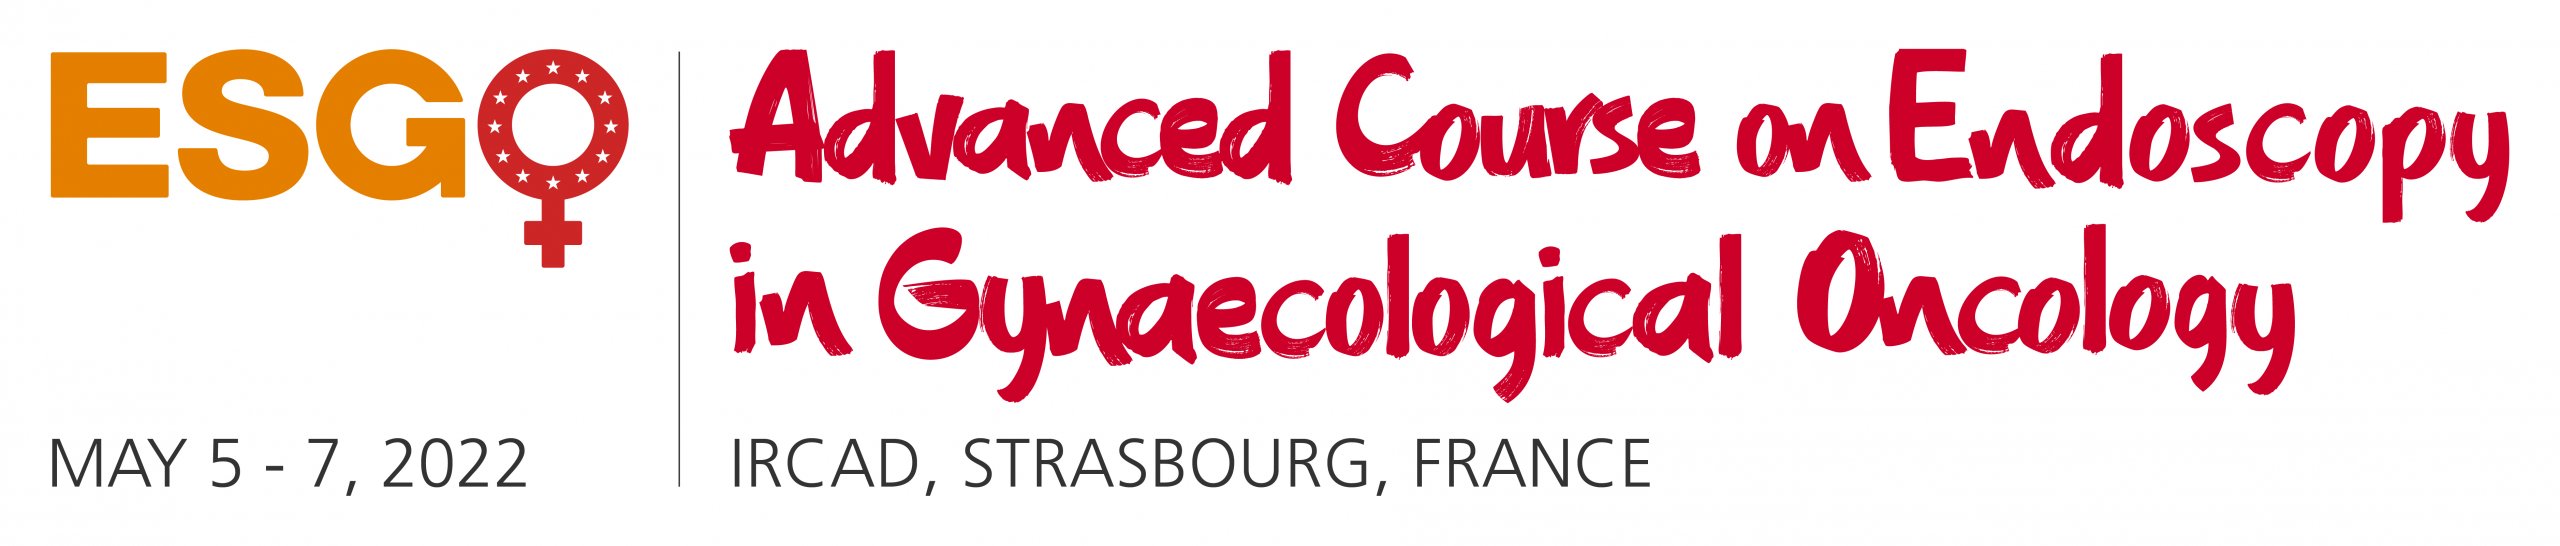 ESGO_Advanced Course on Endoscopy in Gynaecological Oncology-01-01_Kreslicí plátno 1